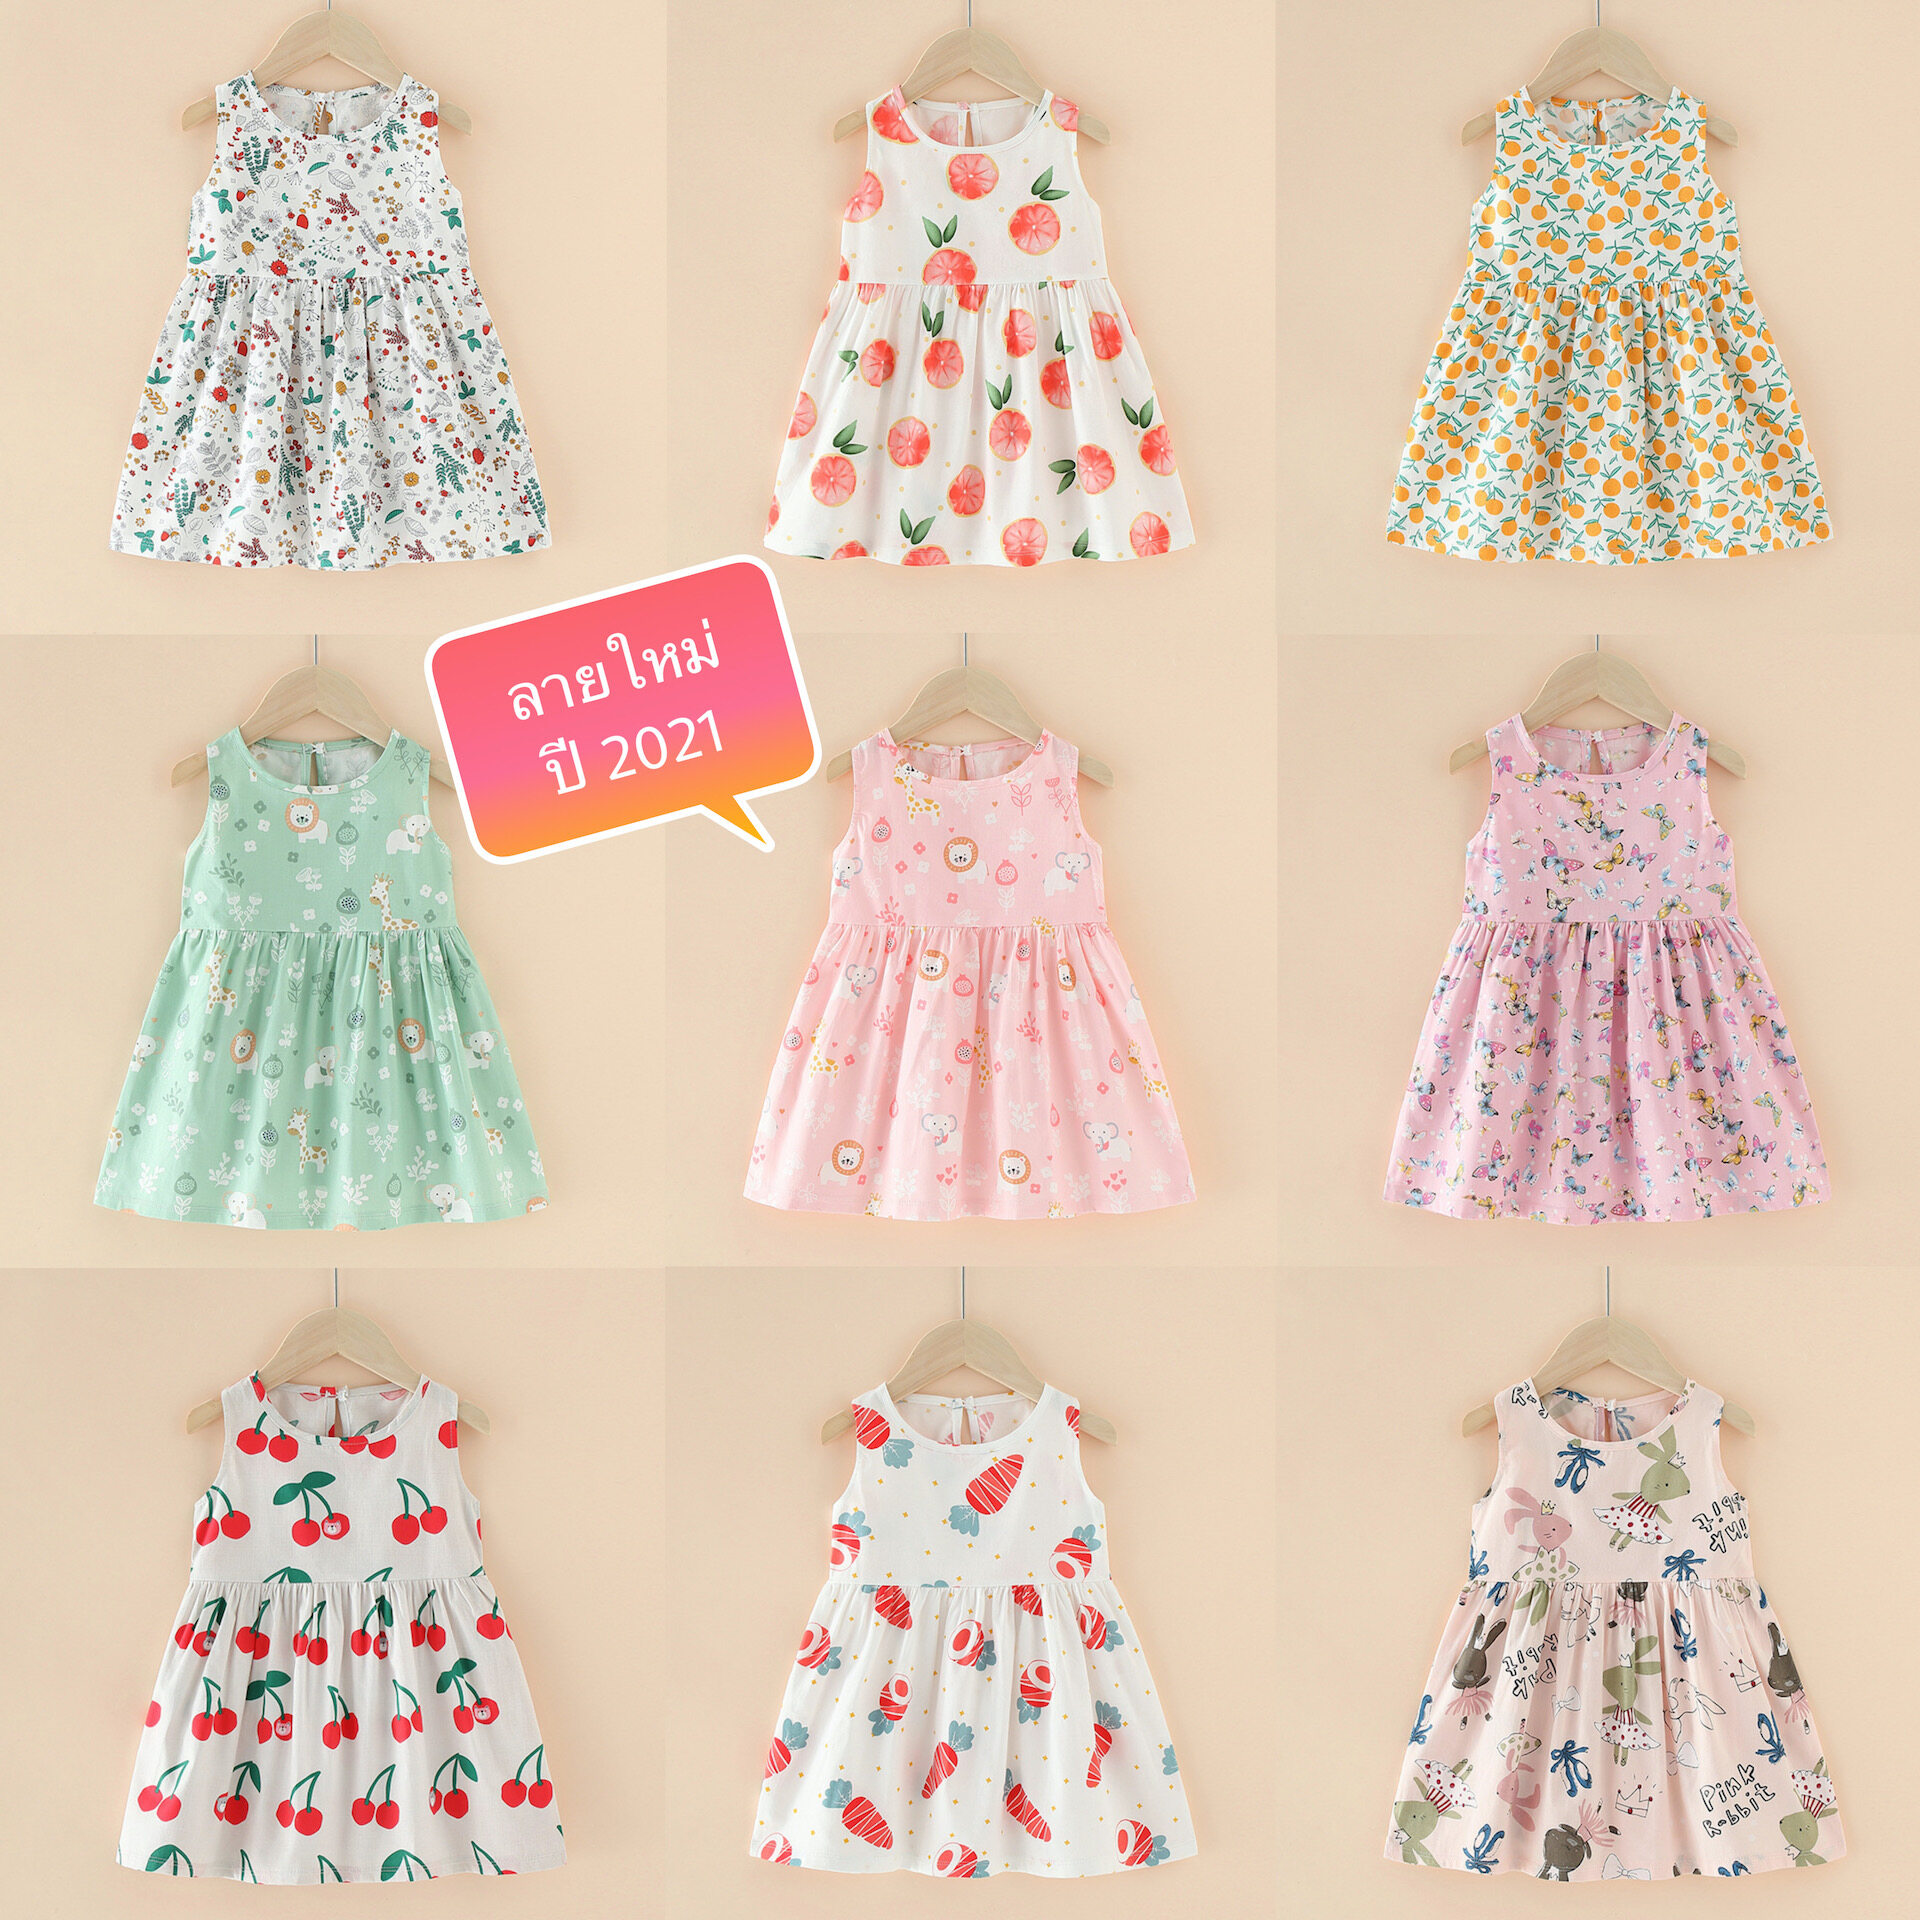 Mini Baby เดรสเด็กผู้หญิง (ลายใหม่ปี 2021) มินิเดรส เดรสเด็ก เดรส dress cotton ผ้าดีมาก งานสวยมาก สีสวยสุดๆ